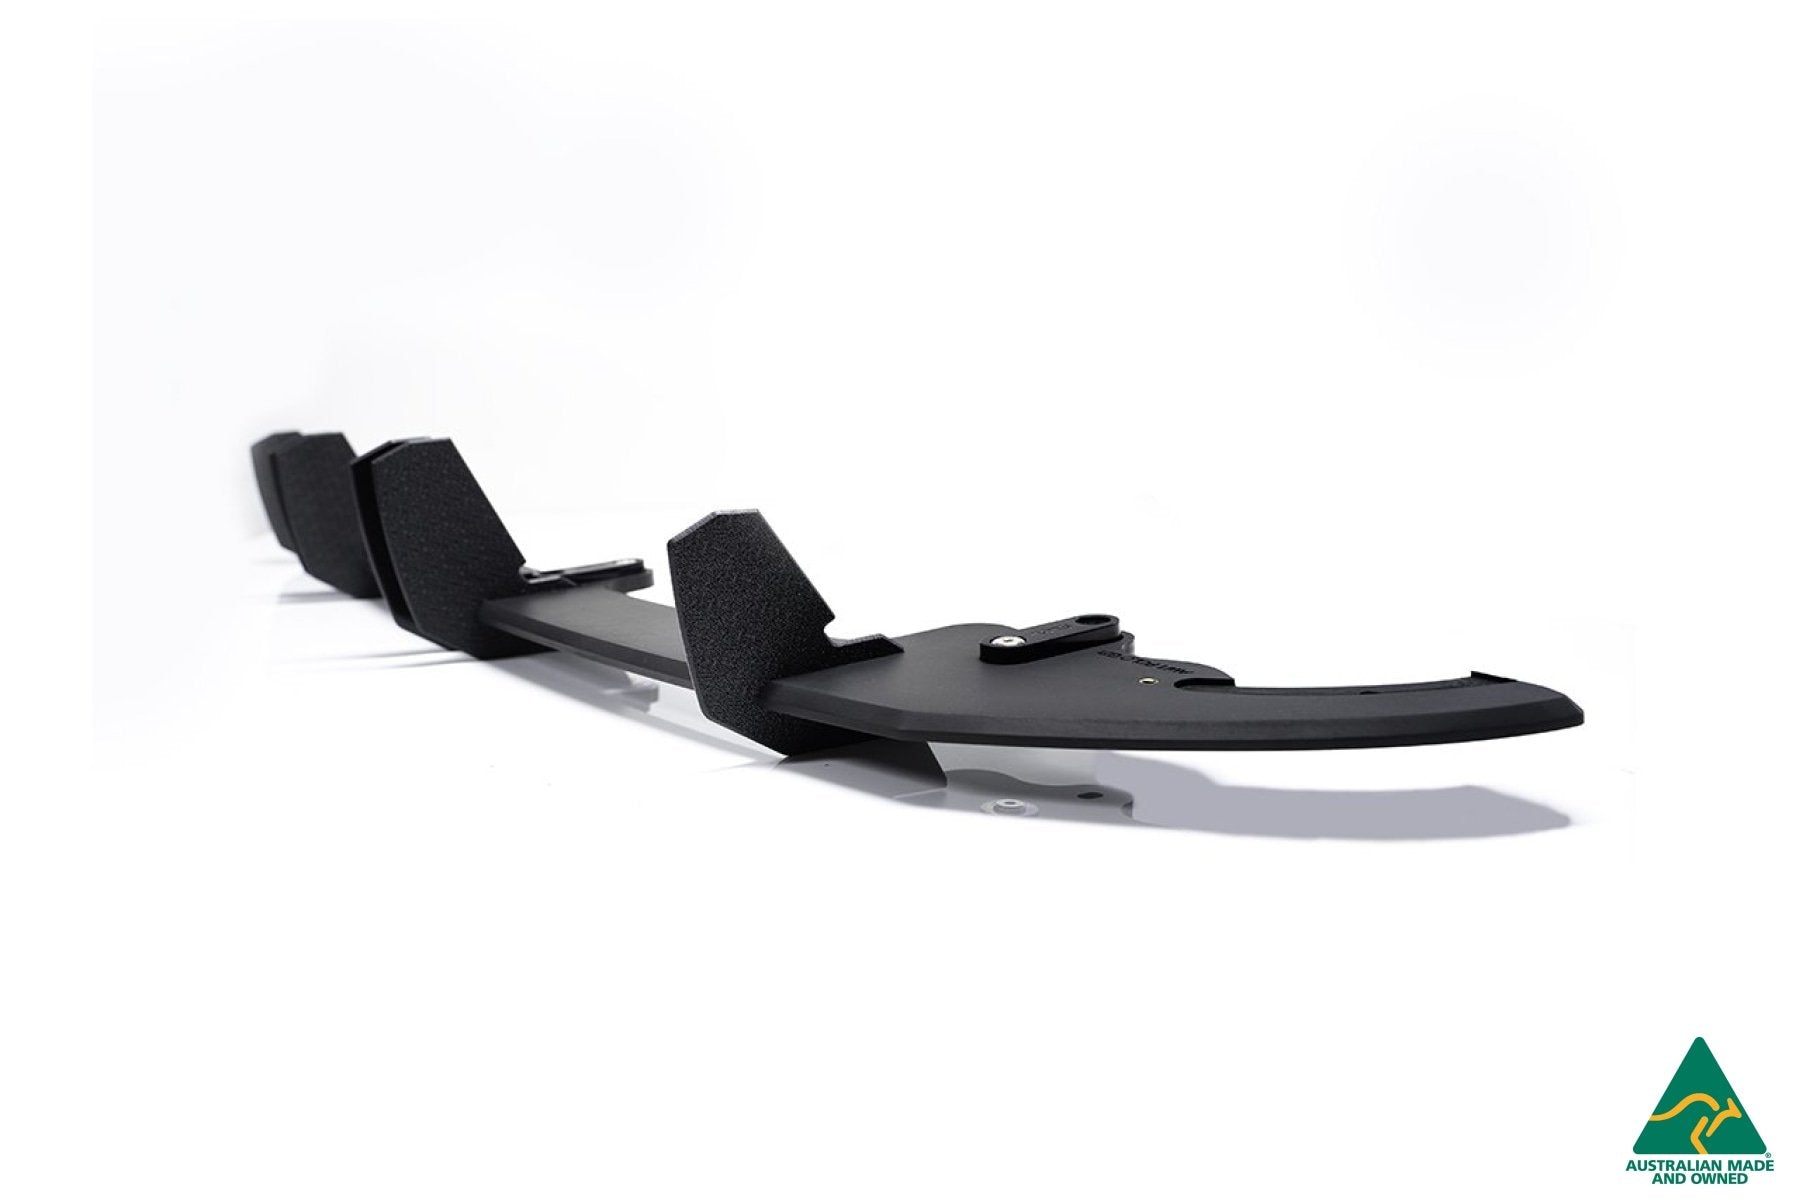 AW Polo GTI Flow-Lock Rear Diffuser - MODE Auto Concepts